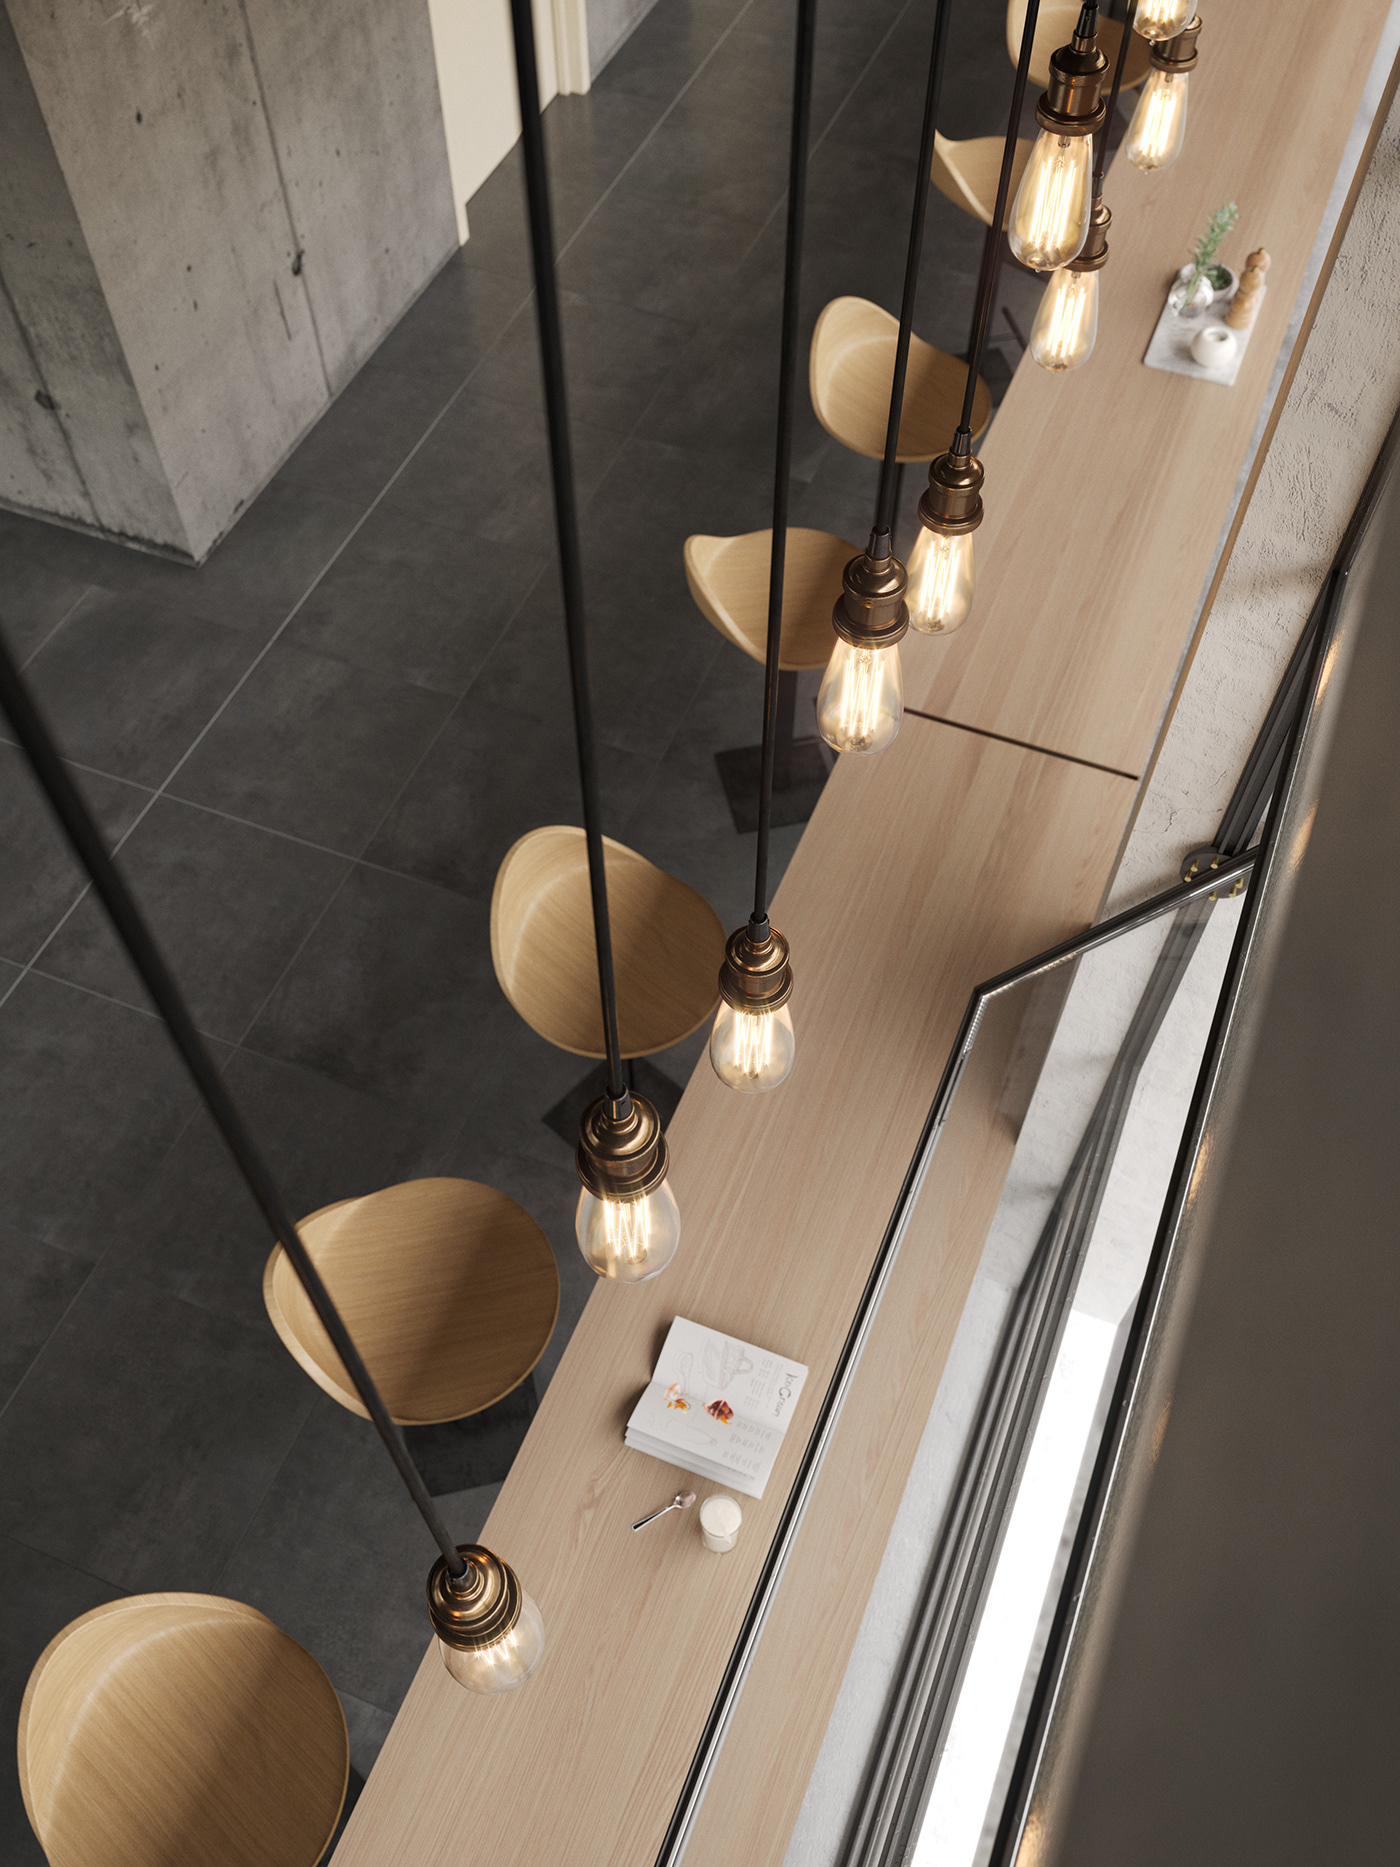 design industrial Interior restaurant visualization light Lamp concrete modern corona